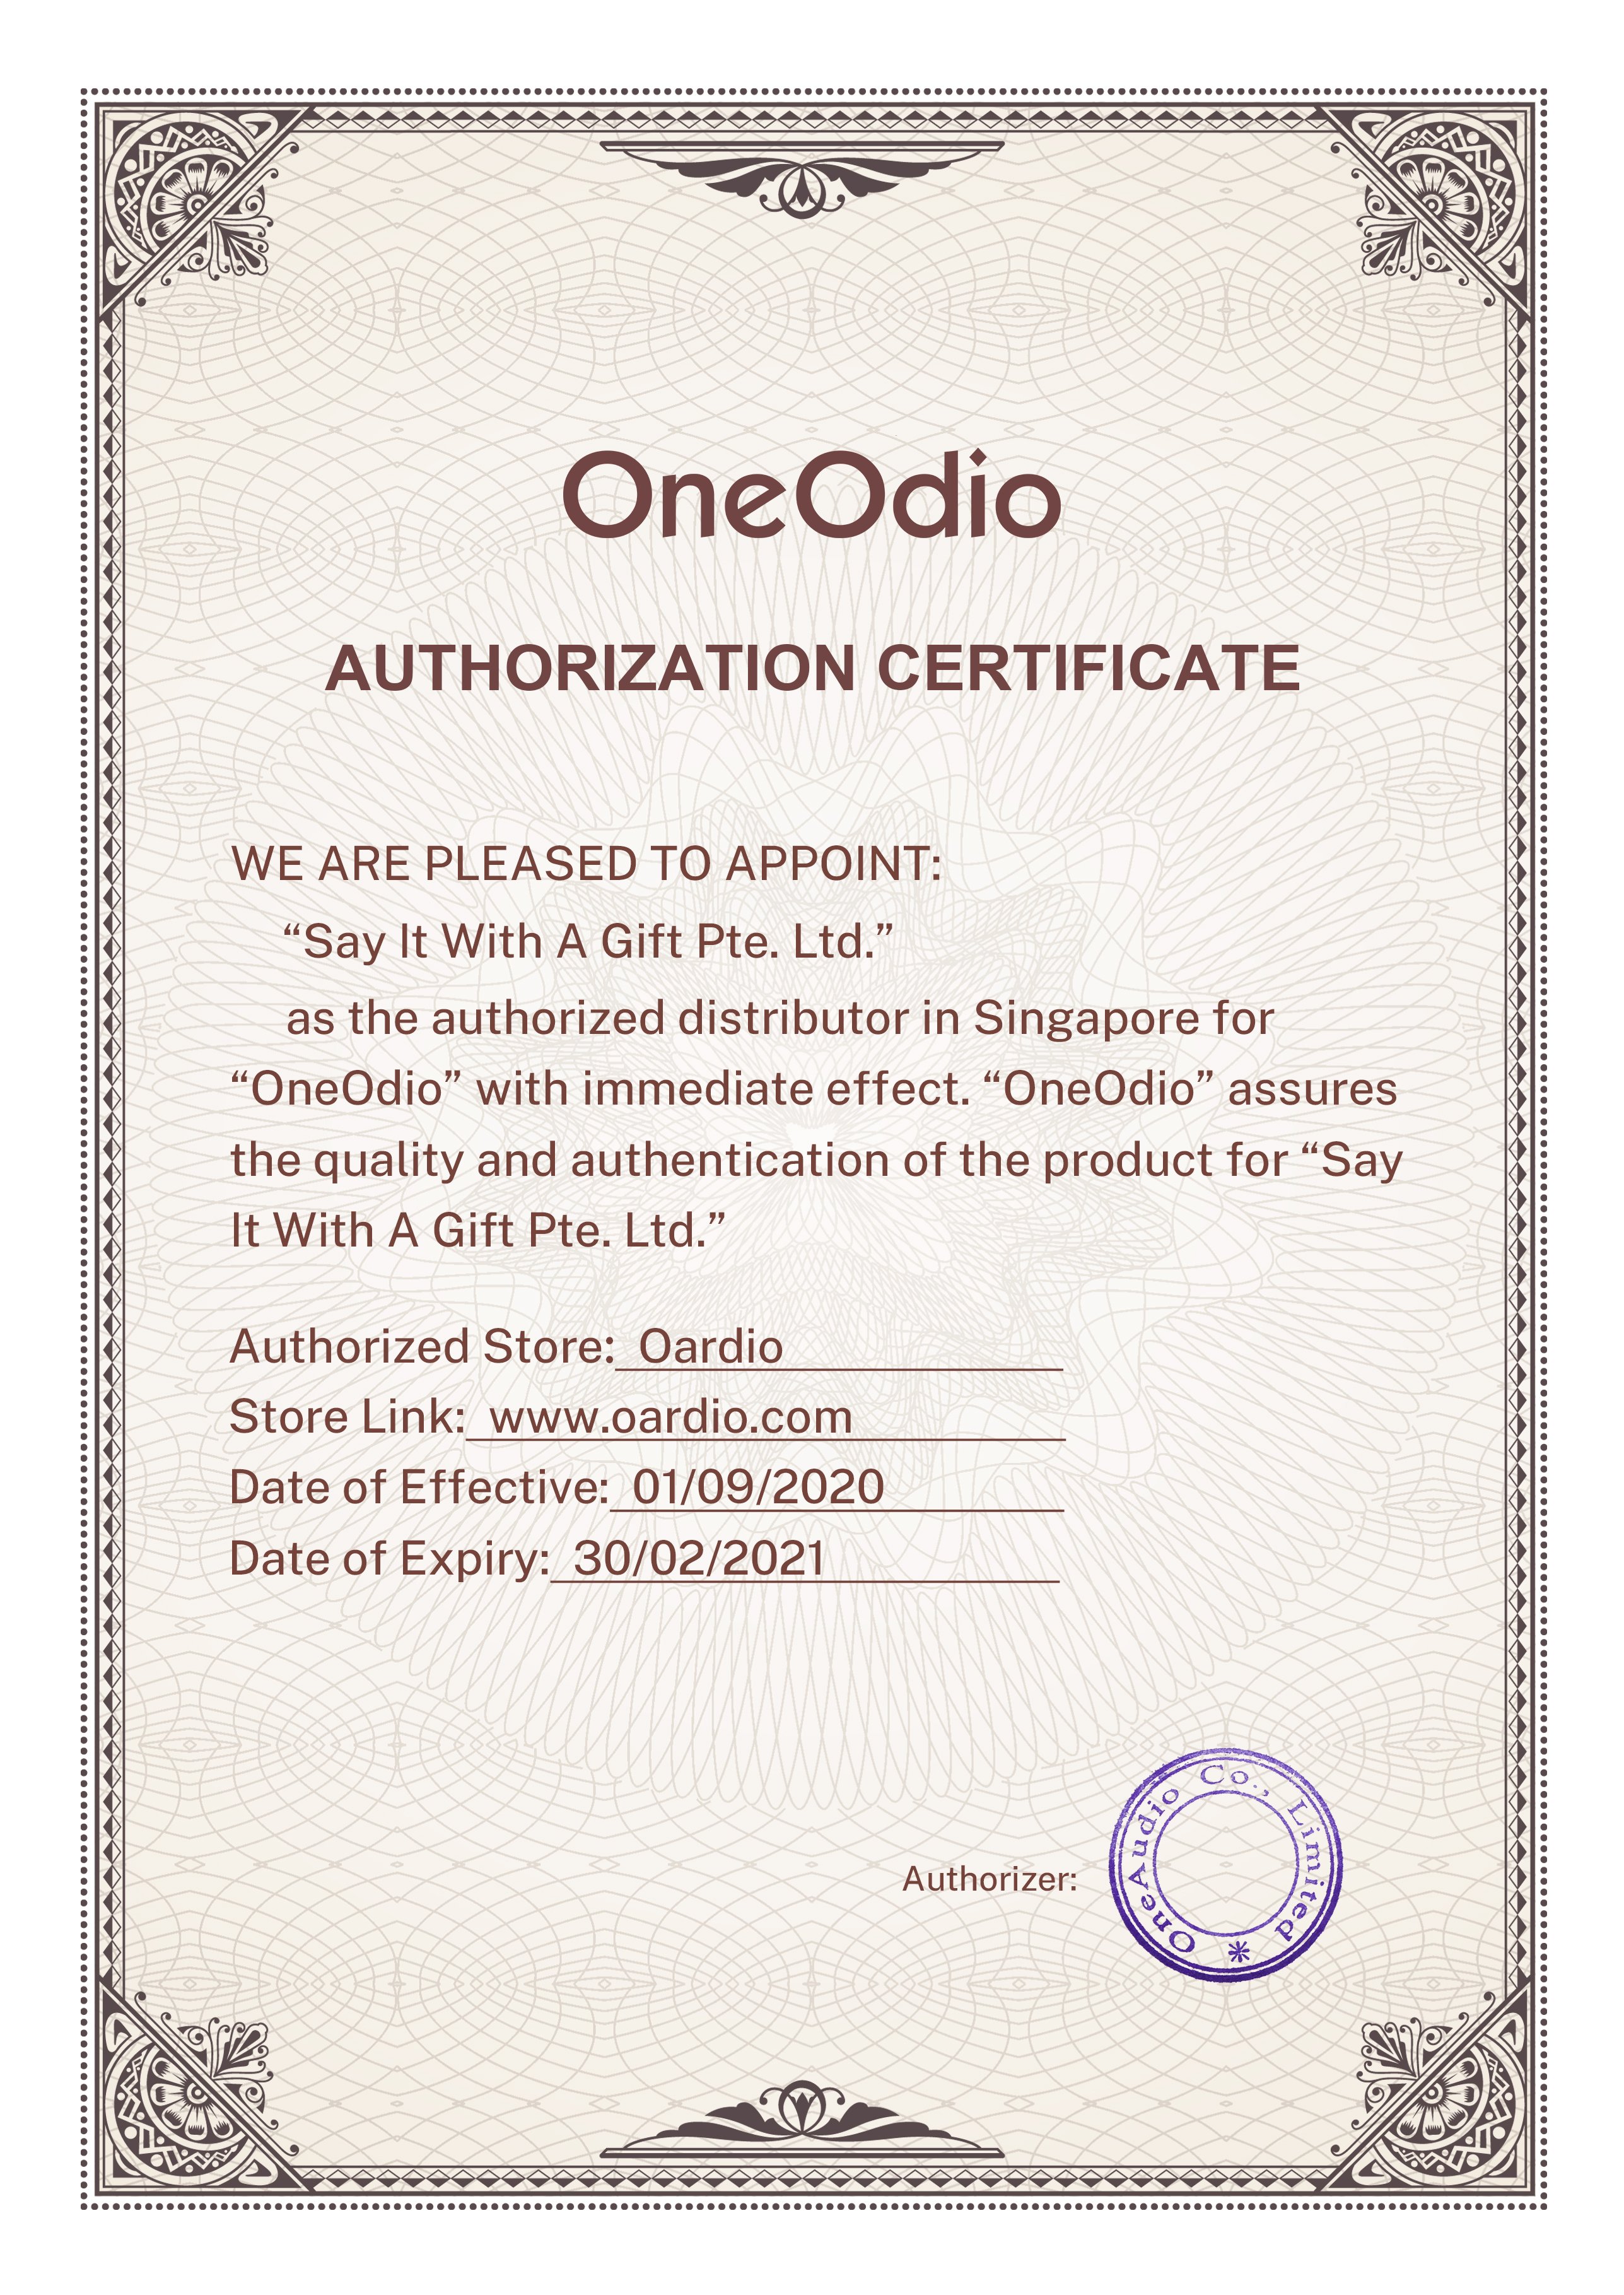 OneOdio Authorized Distributor Singapore Certificate Singapore